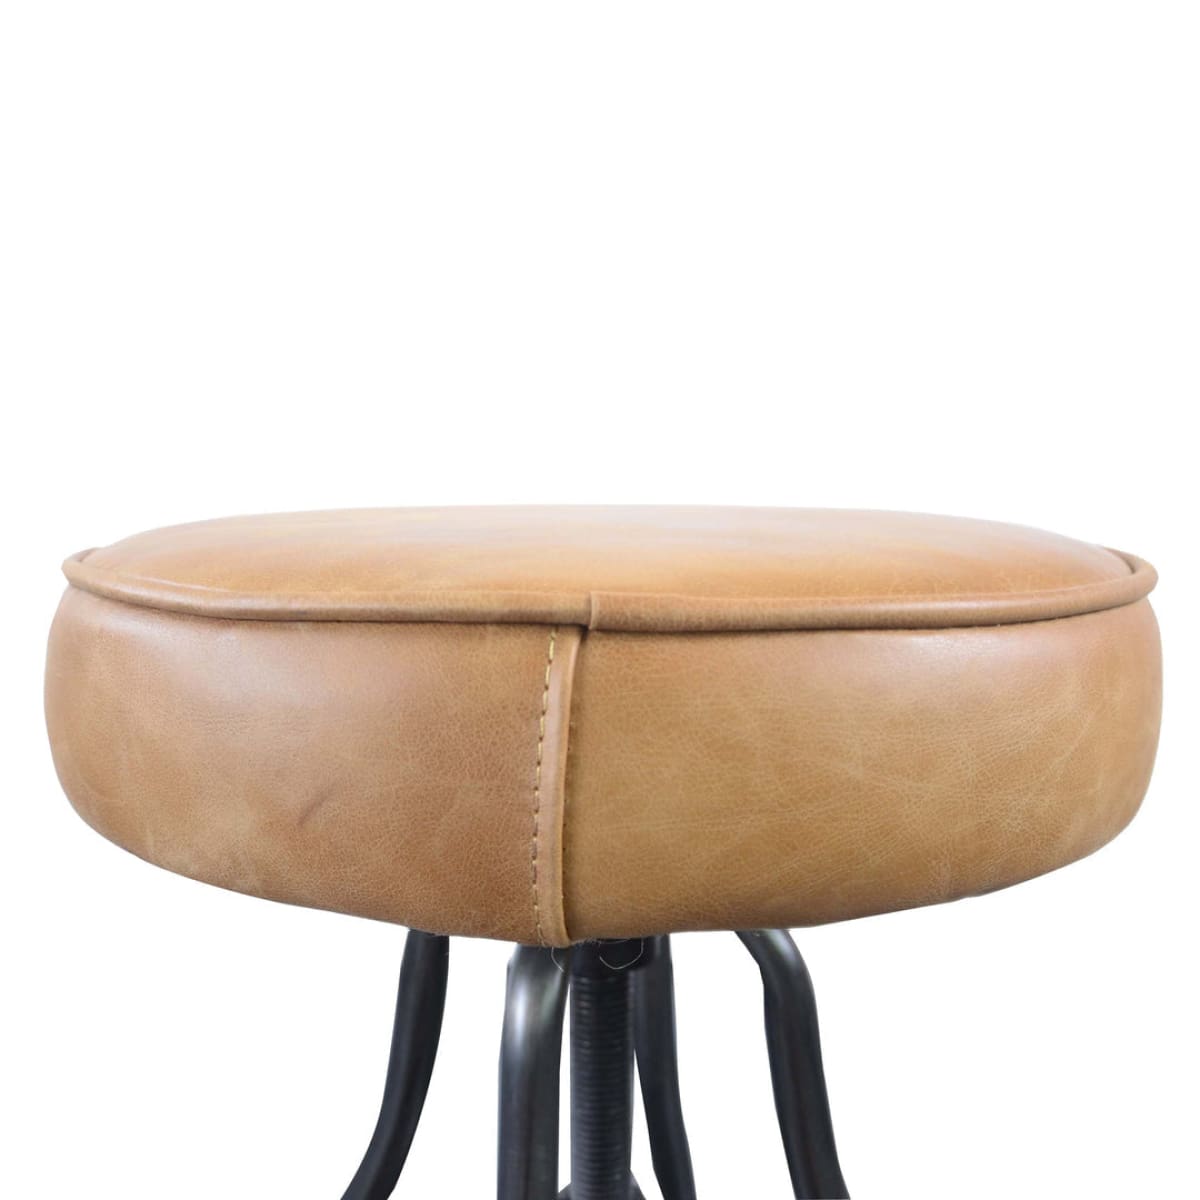 Bowie Bar Stool - Cognac Leather - lh-import-stools